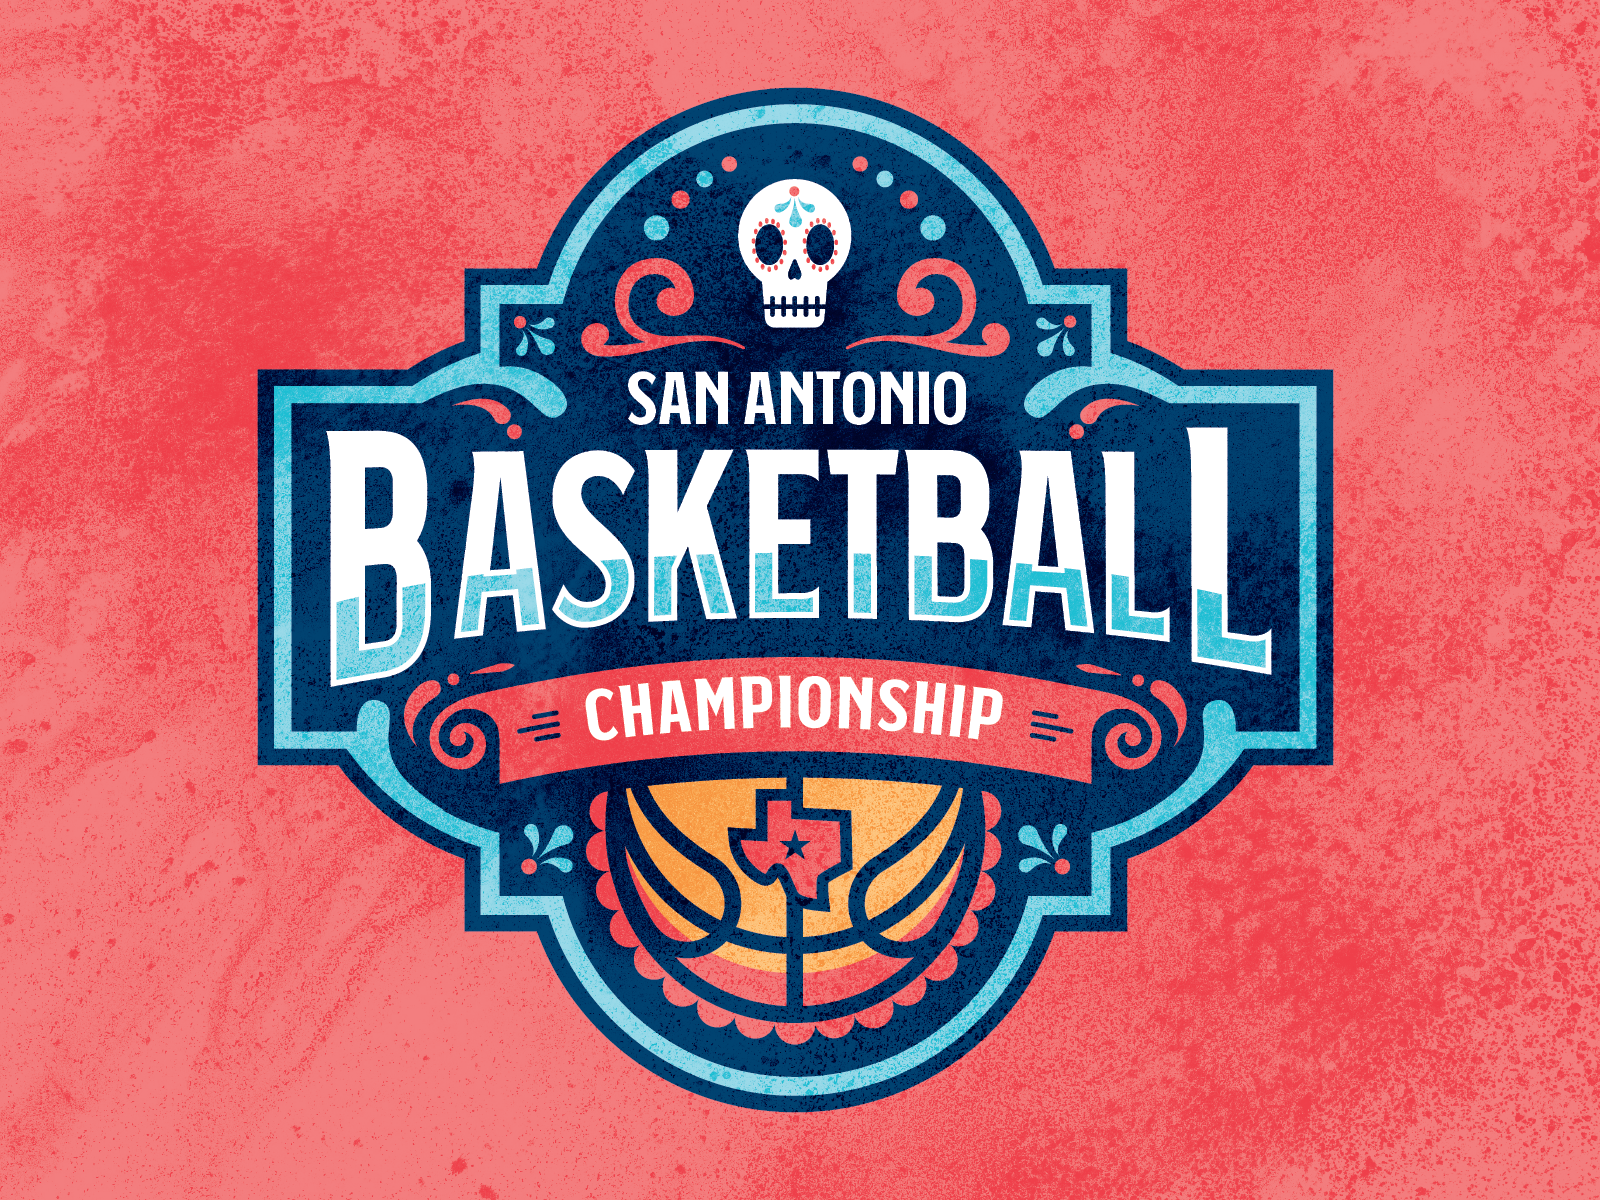 San Antonio Basketball Championship Logo by Joel Hudson on Dribbble